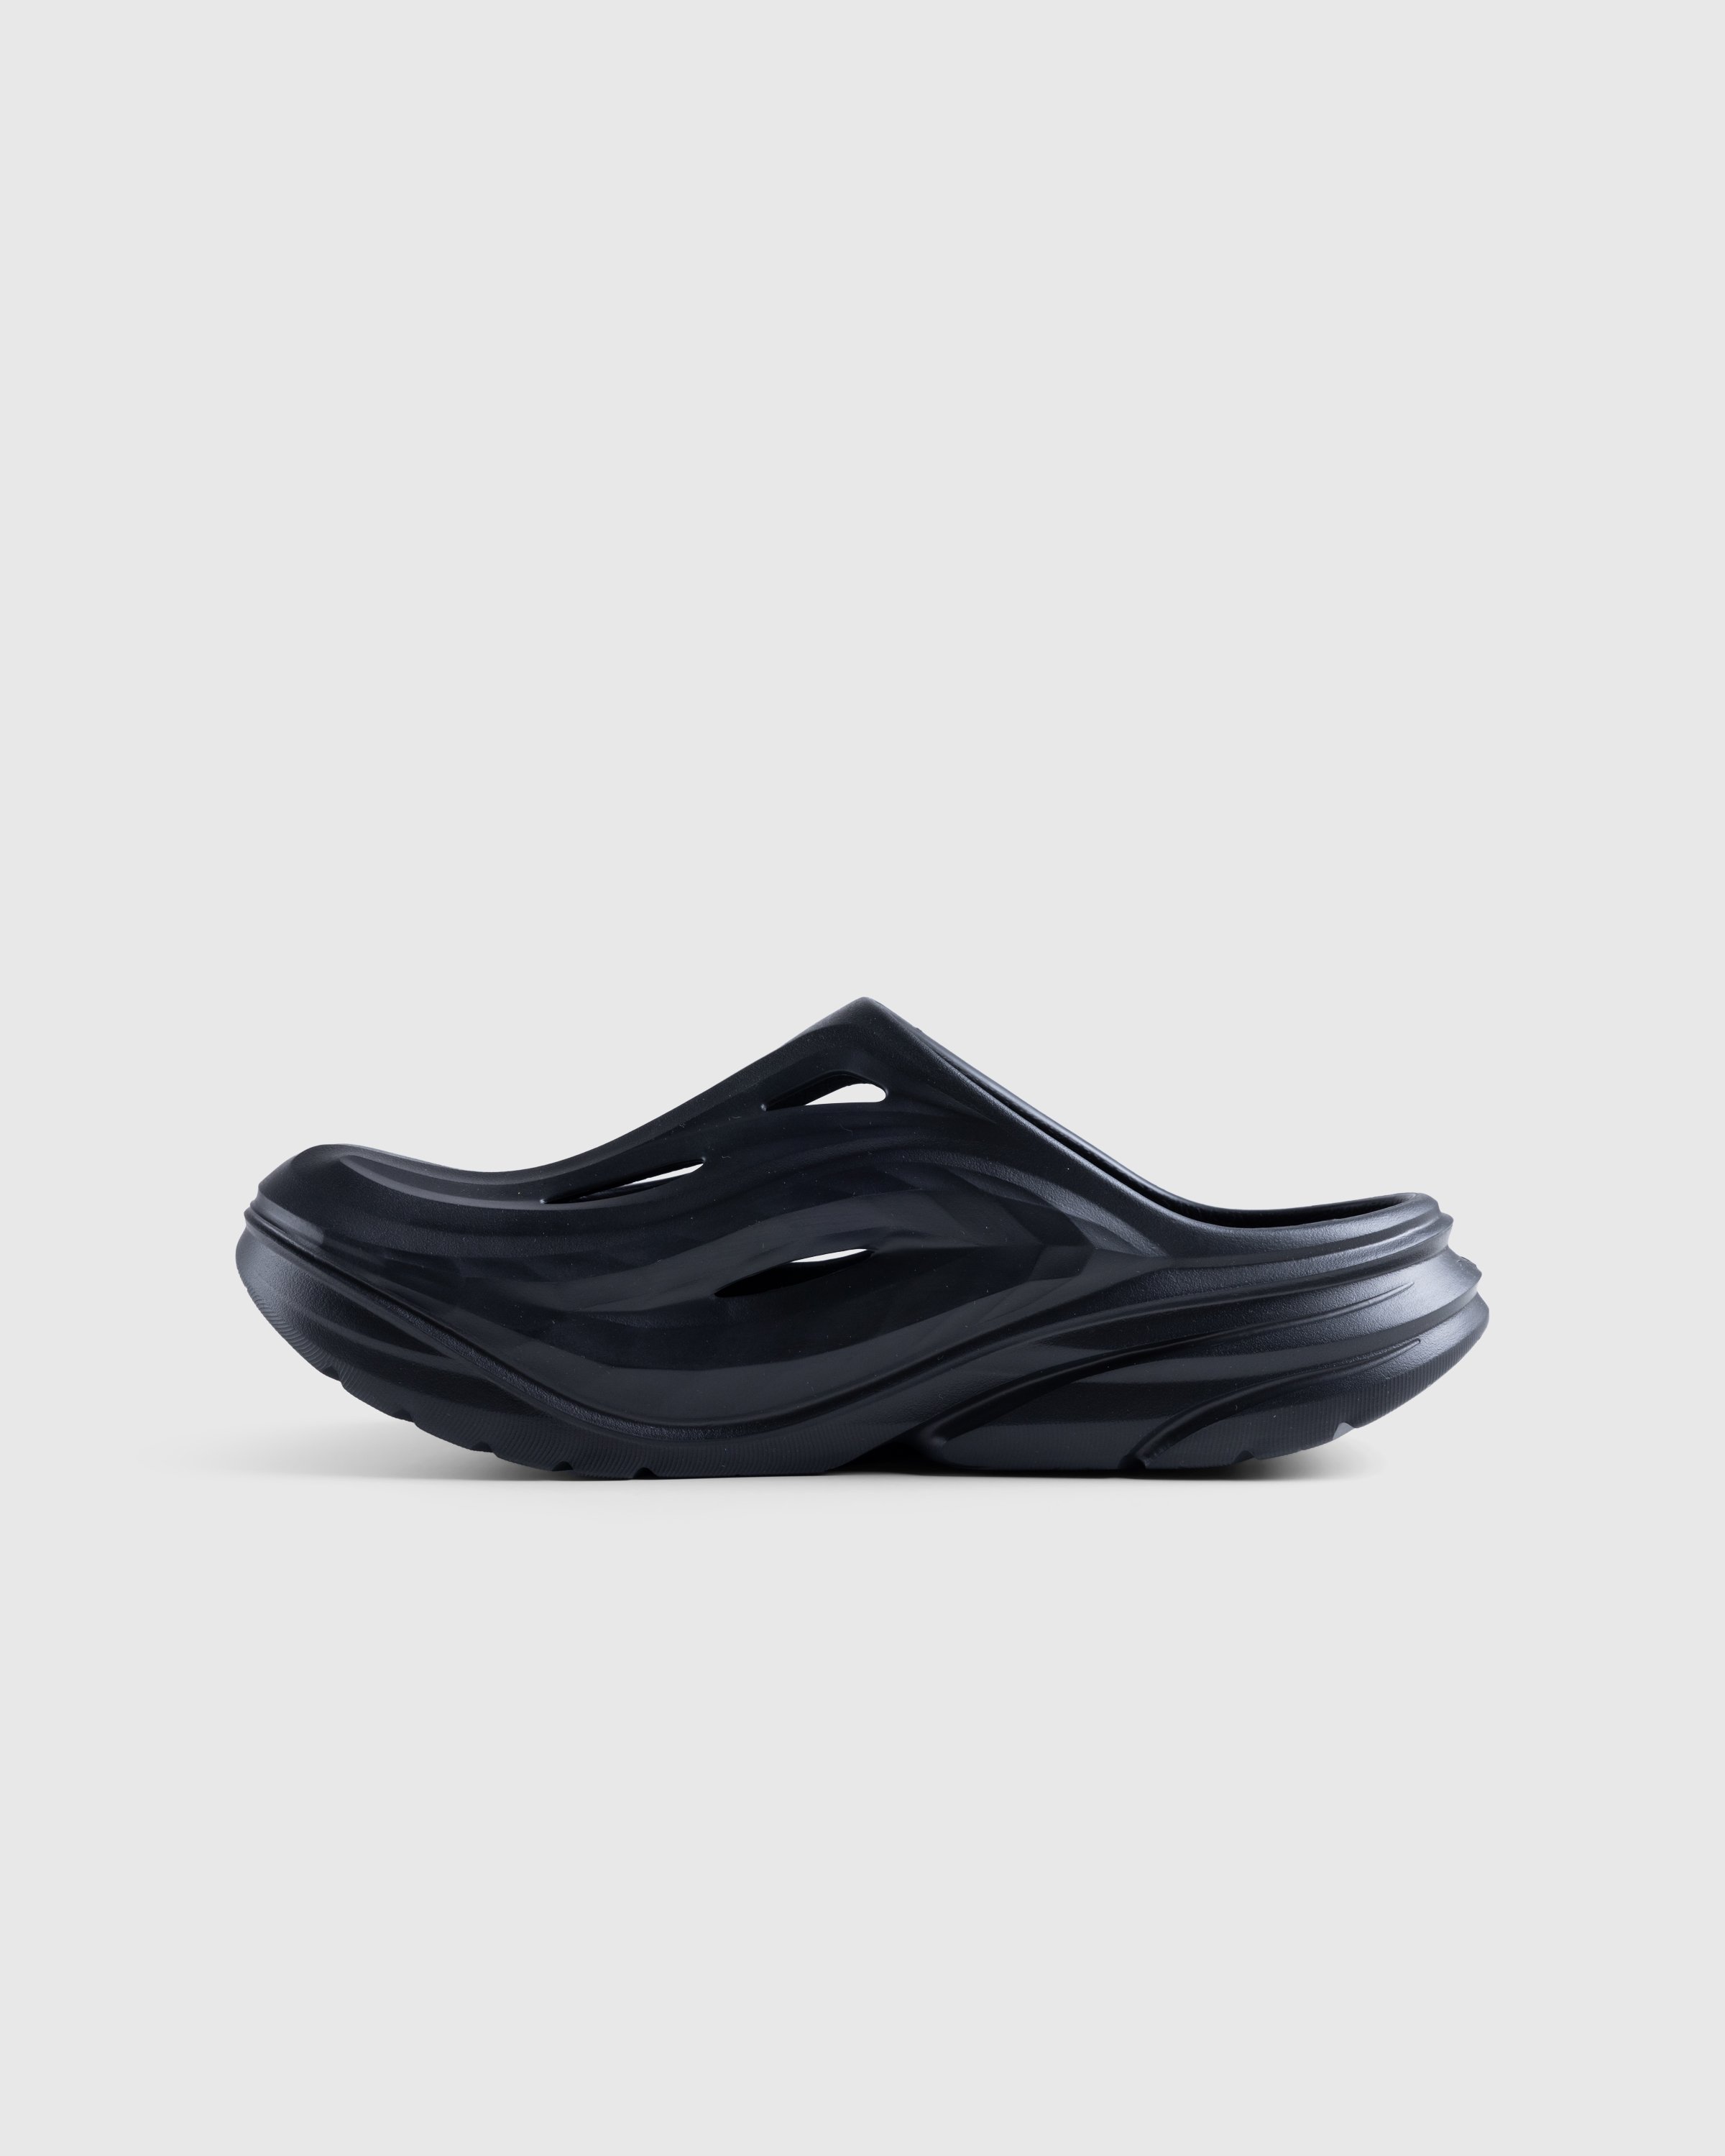 HOKA - W ORA RECOVERY MULE - Footwear - Black - Image 2